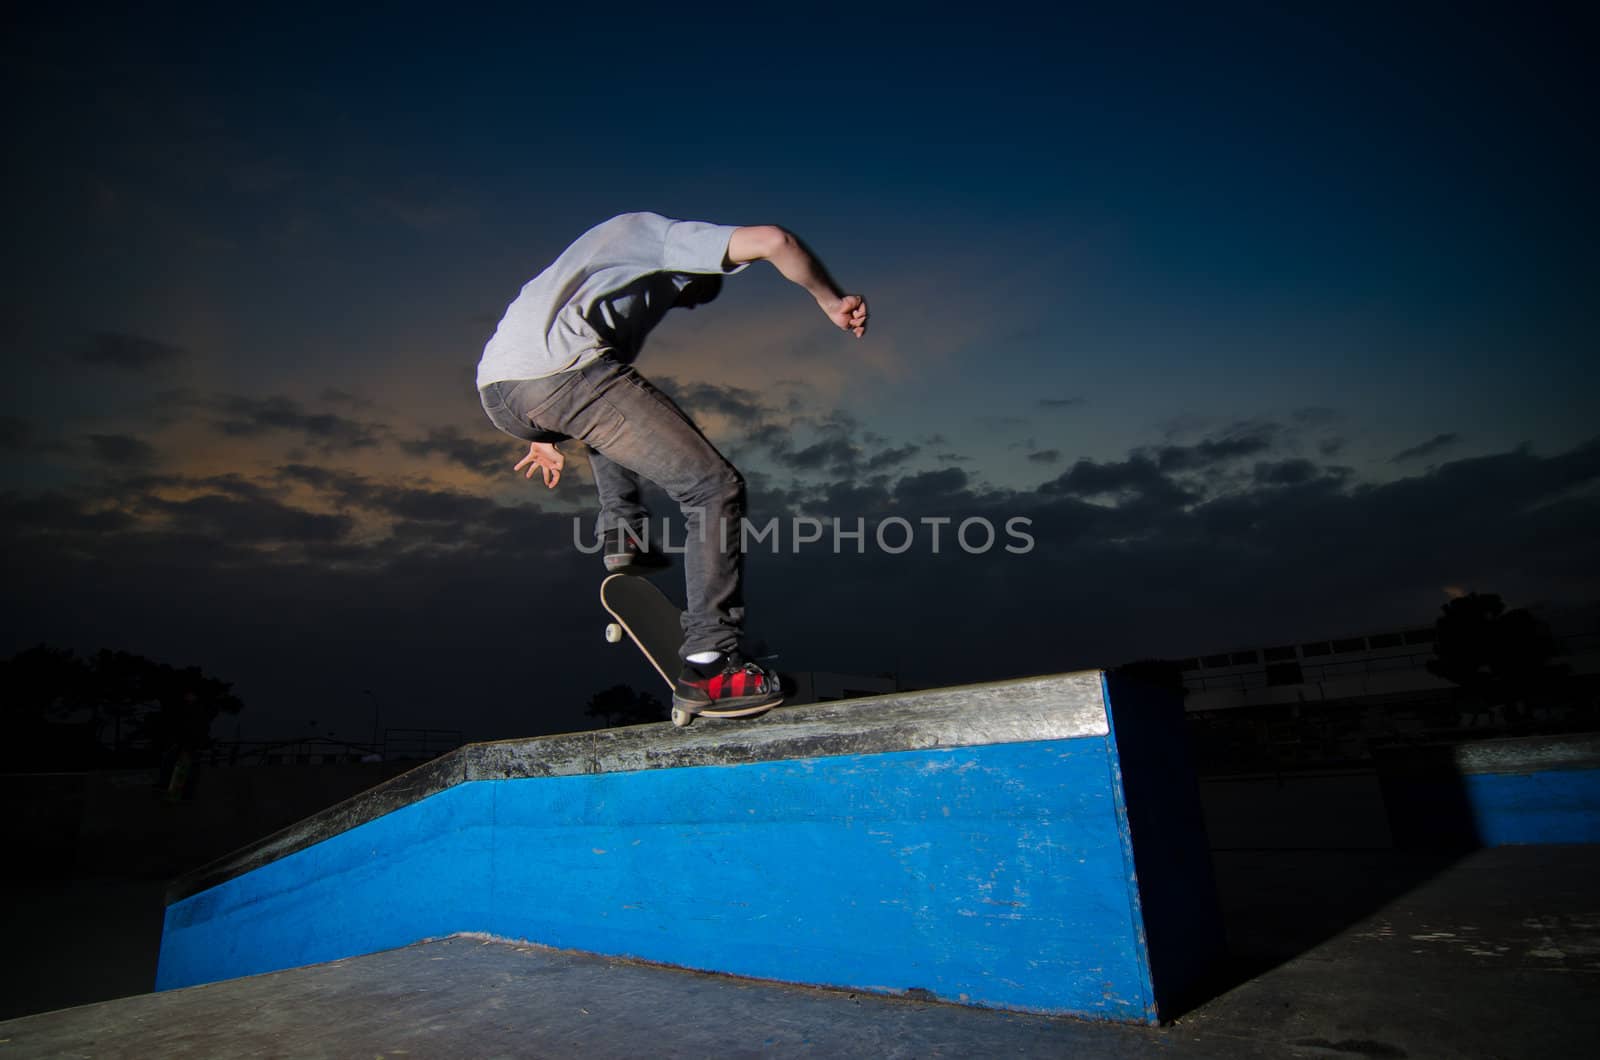 Skateboarder on a grind at the local skatepark.